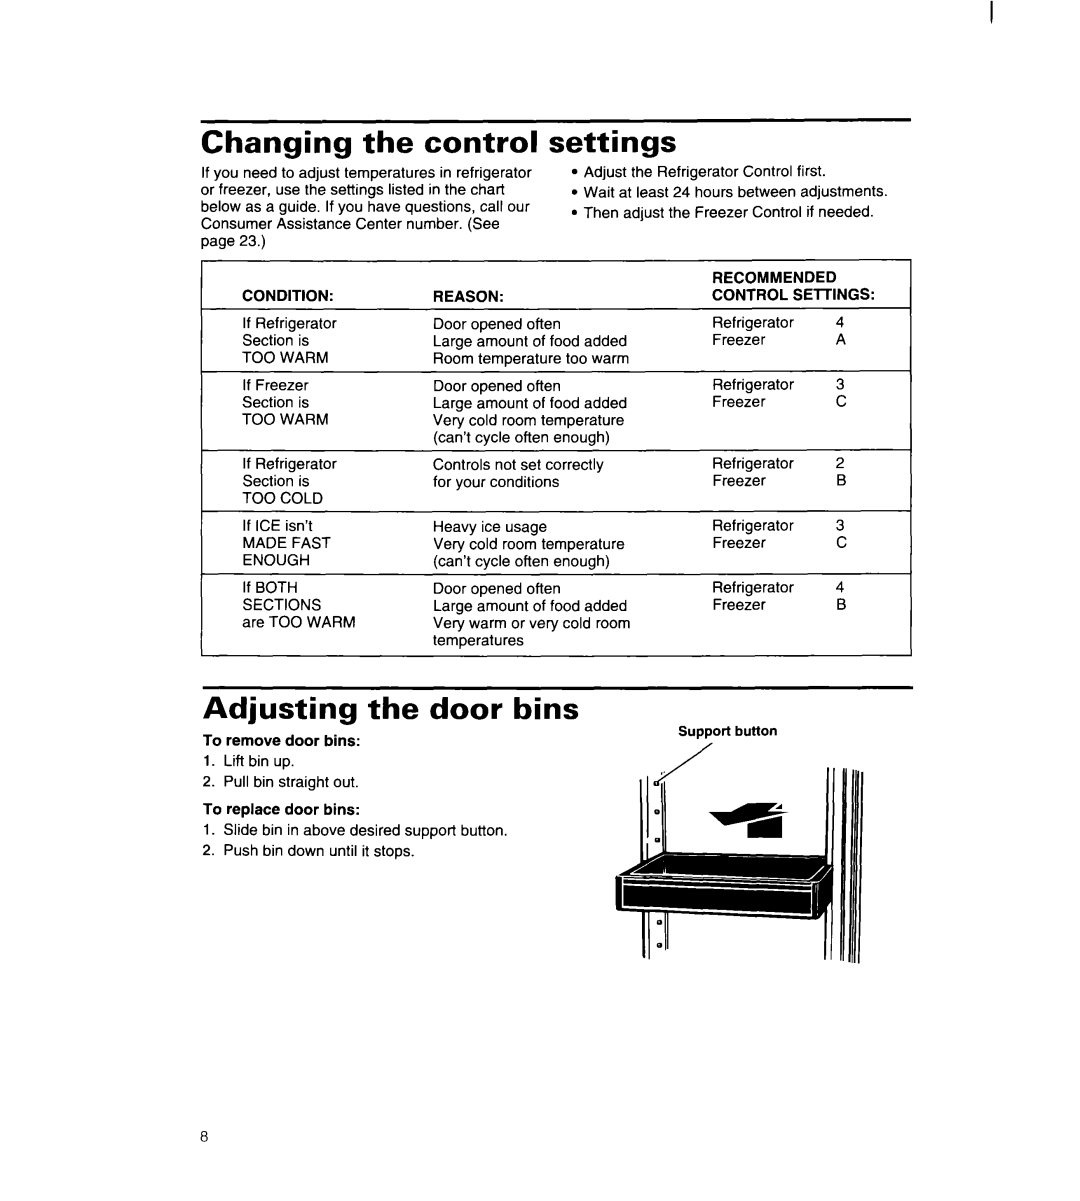 Whirlpool 8ED22PW manual Changing the control, settings, Adjusting the door bins 